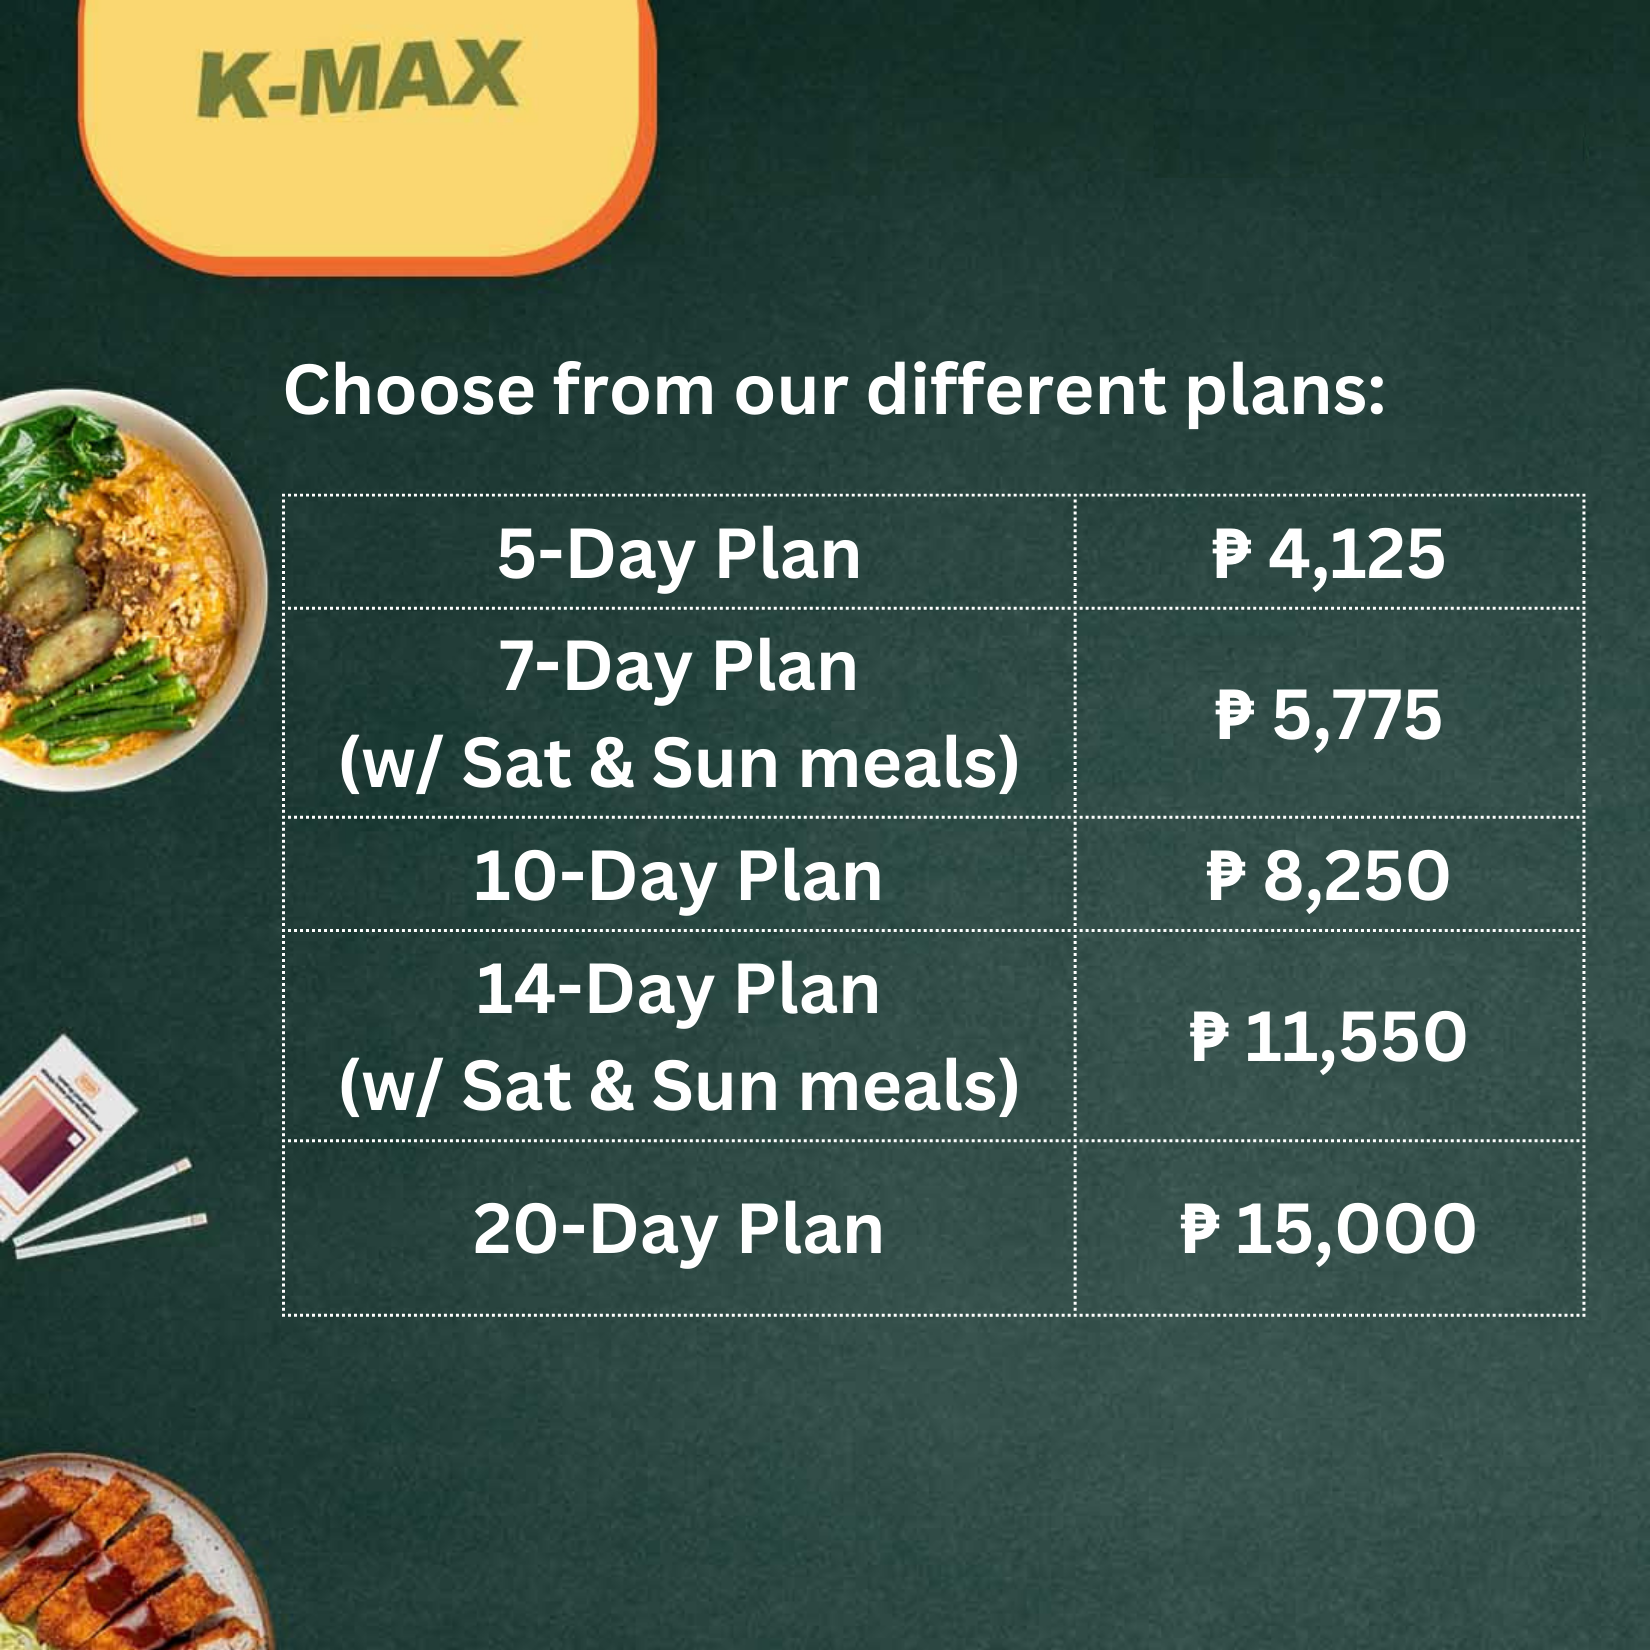 keto diet manila | keto free delivery | keto meal delivery | ketos of manila | weight loss meal plan | weight loss manila | best weight loss